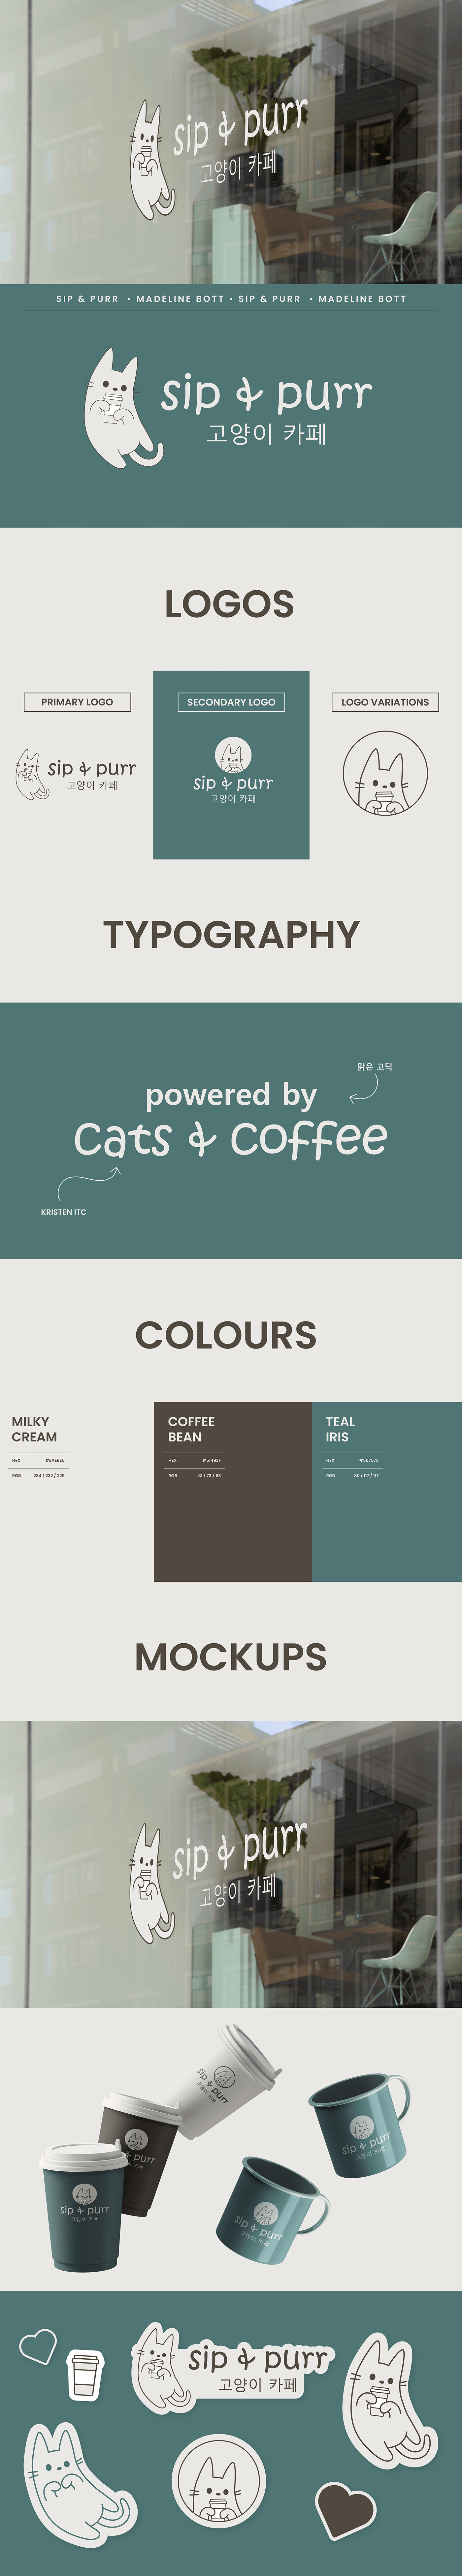 Cat cafe coffee logo brand identity ILLUSTRATION  Graphic Designer Logo Design logos adobe illustrator visual identity